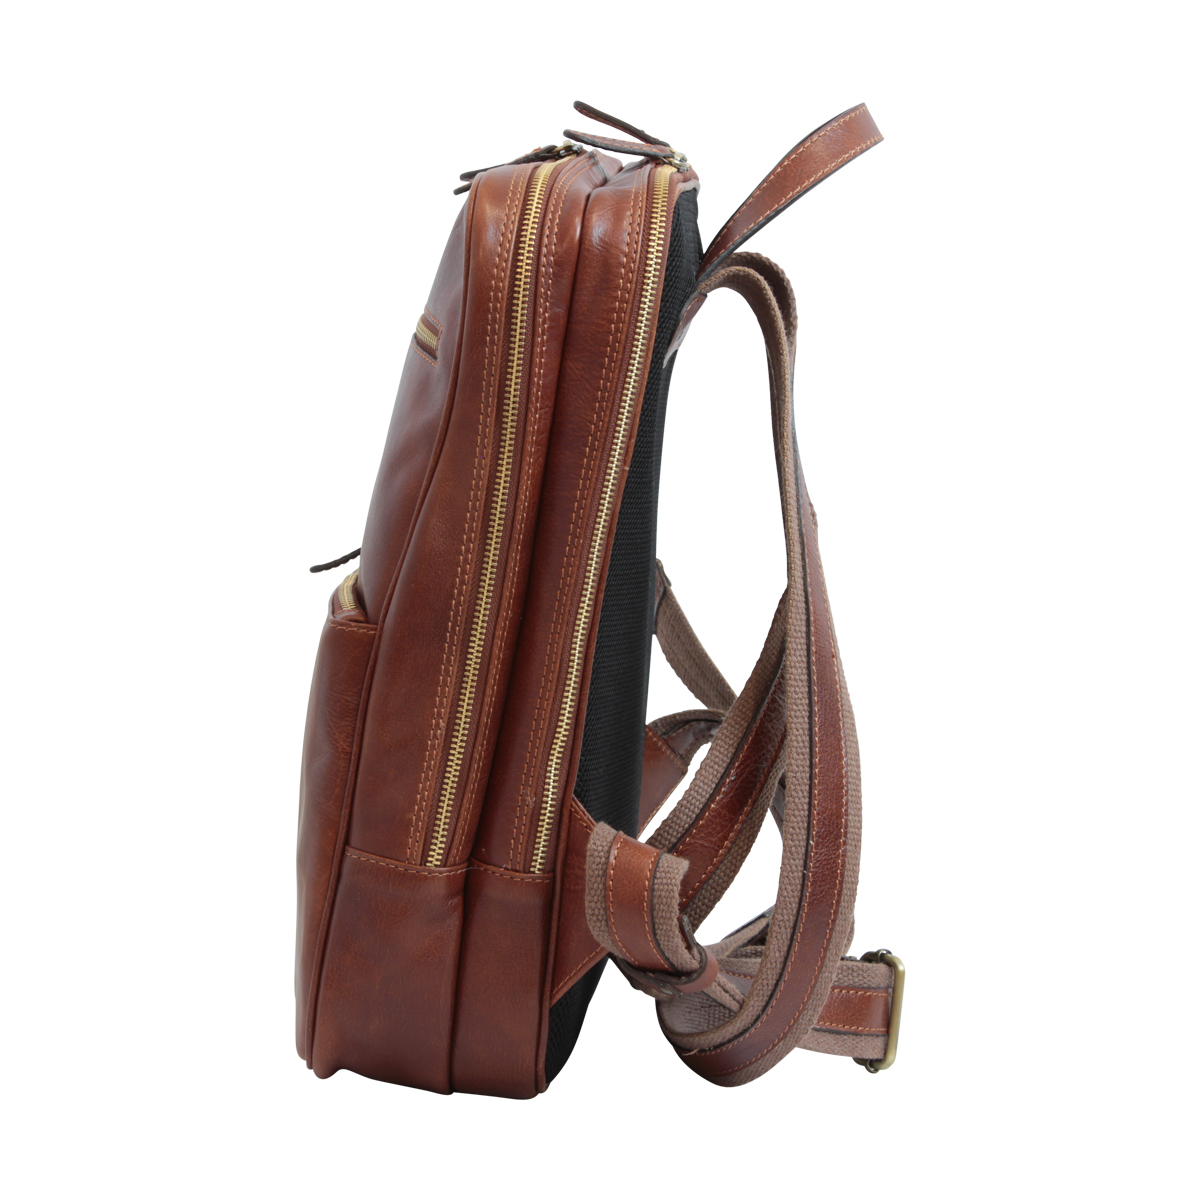 Leather backpack  413689MA | 413689MA UK | Old Angler Firenze